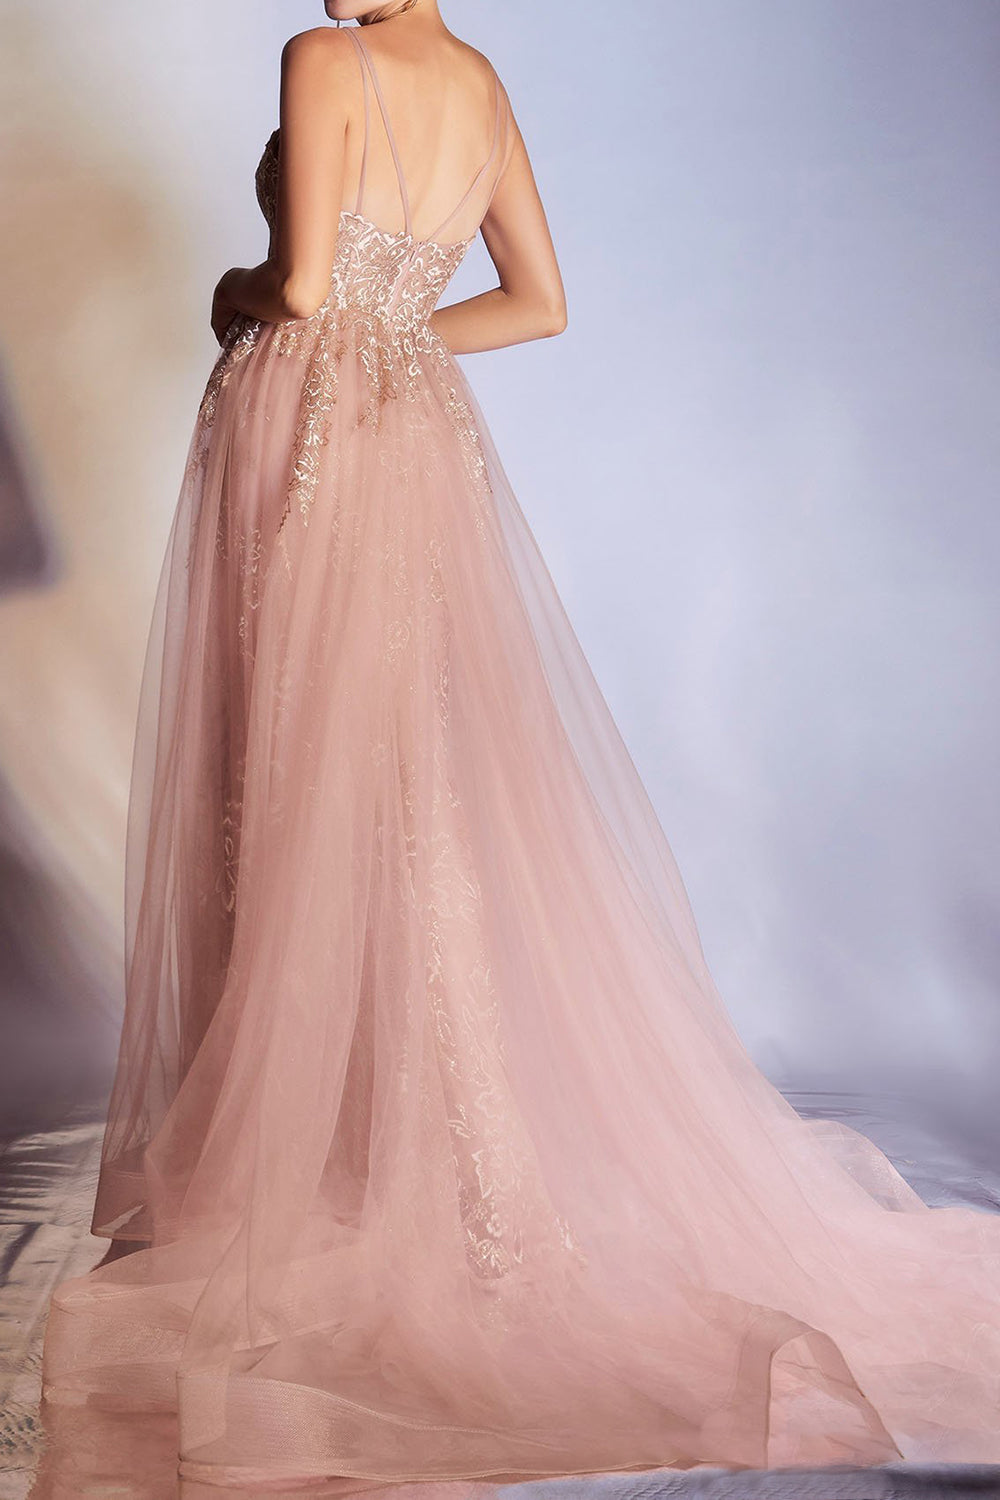 Elegant Floral Lace Tulle Spaghetti Strapes Prom Dress